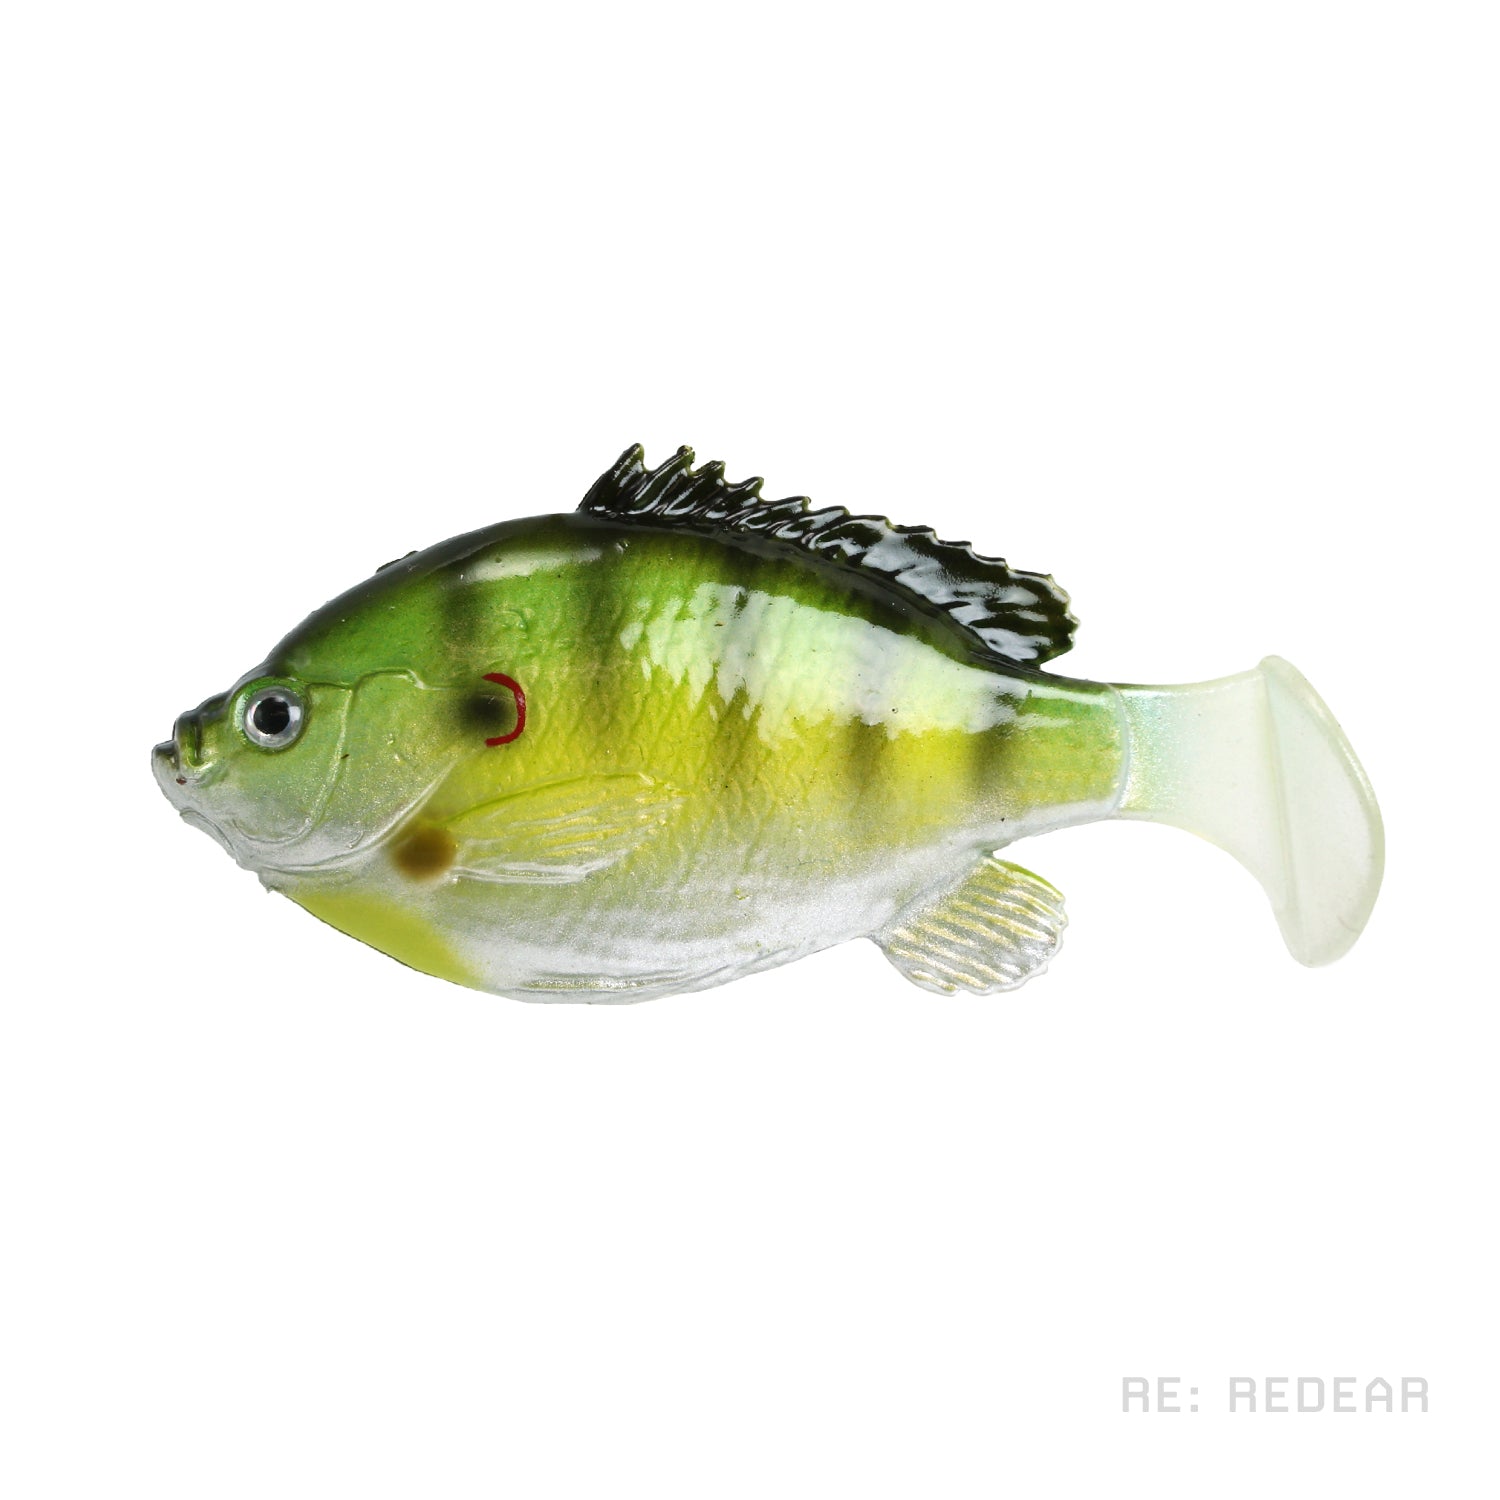   Bluegill-Swim-Bait-Soft-Plastic-Swimbaits-Small-Bluegill-Sunfish-Weedless-Swimbait-Fishing-Lures-for-Bass-Pike  : Sports & Outdoors